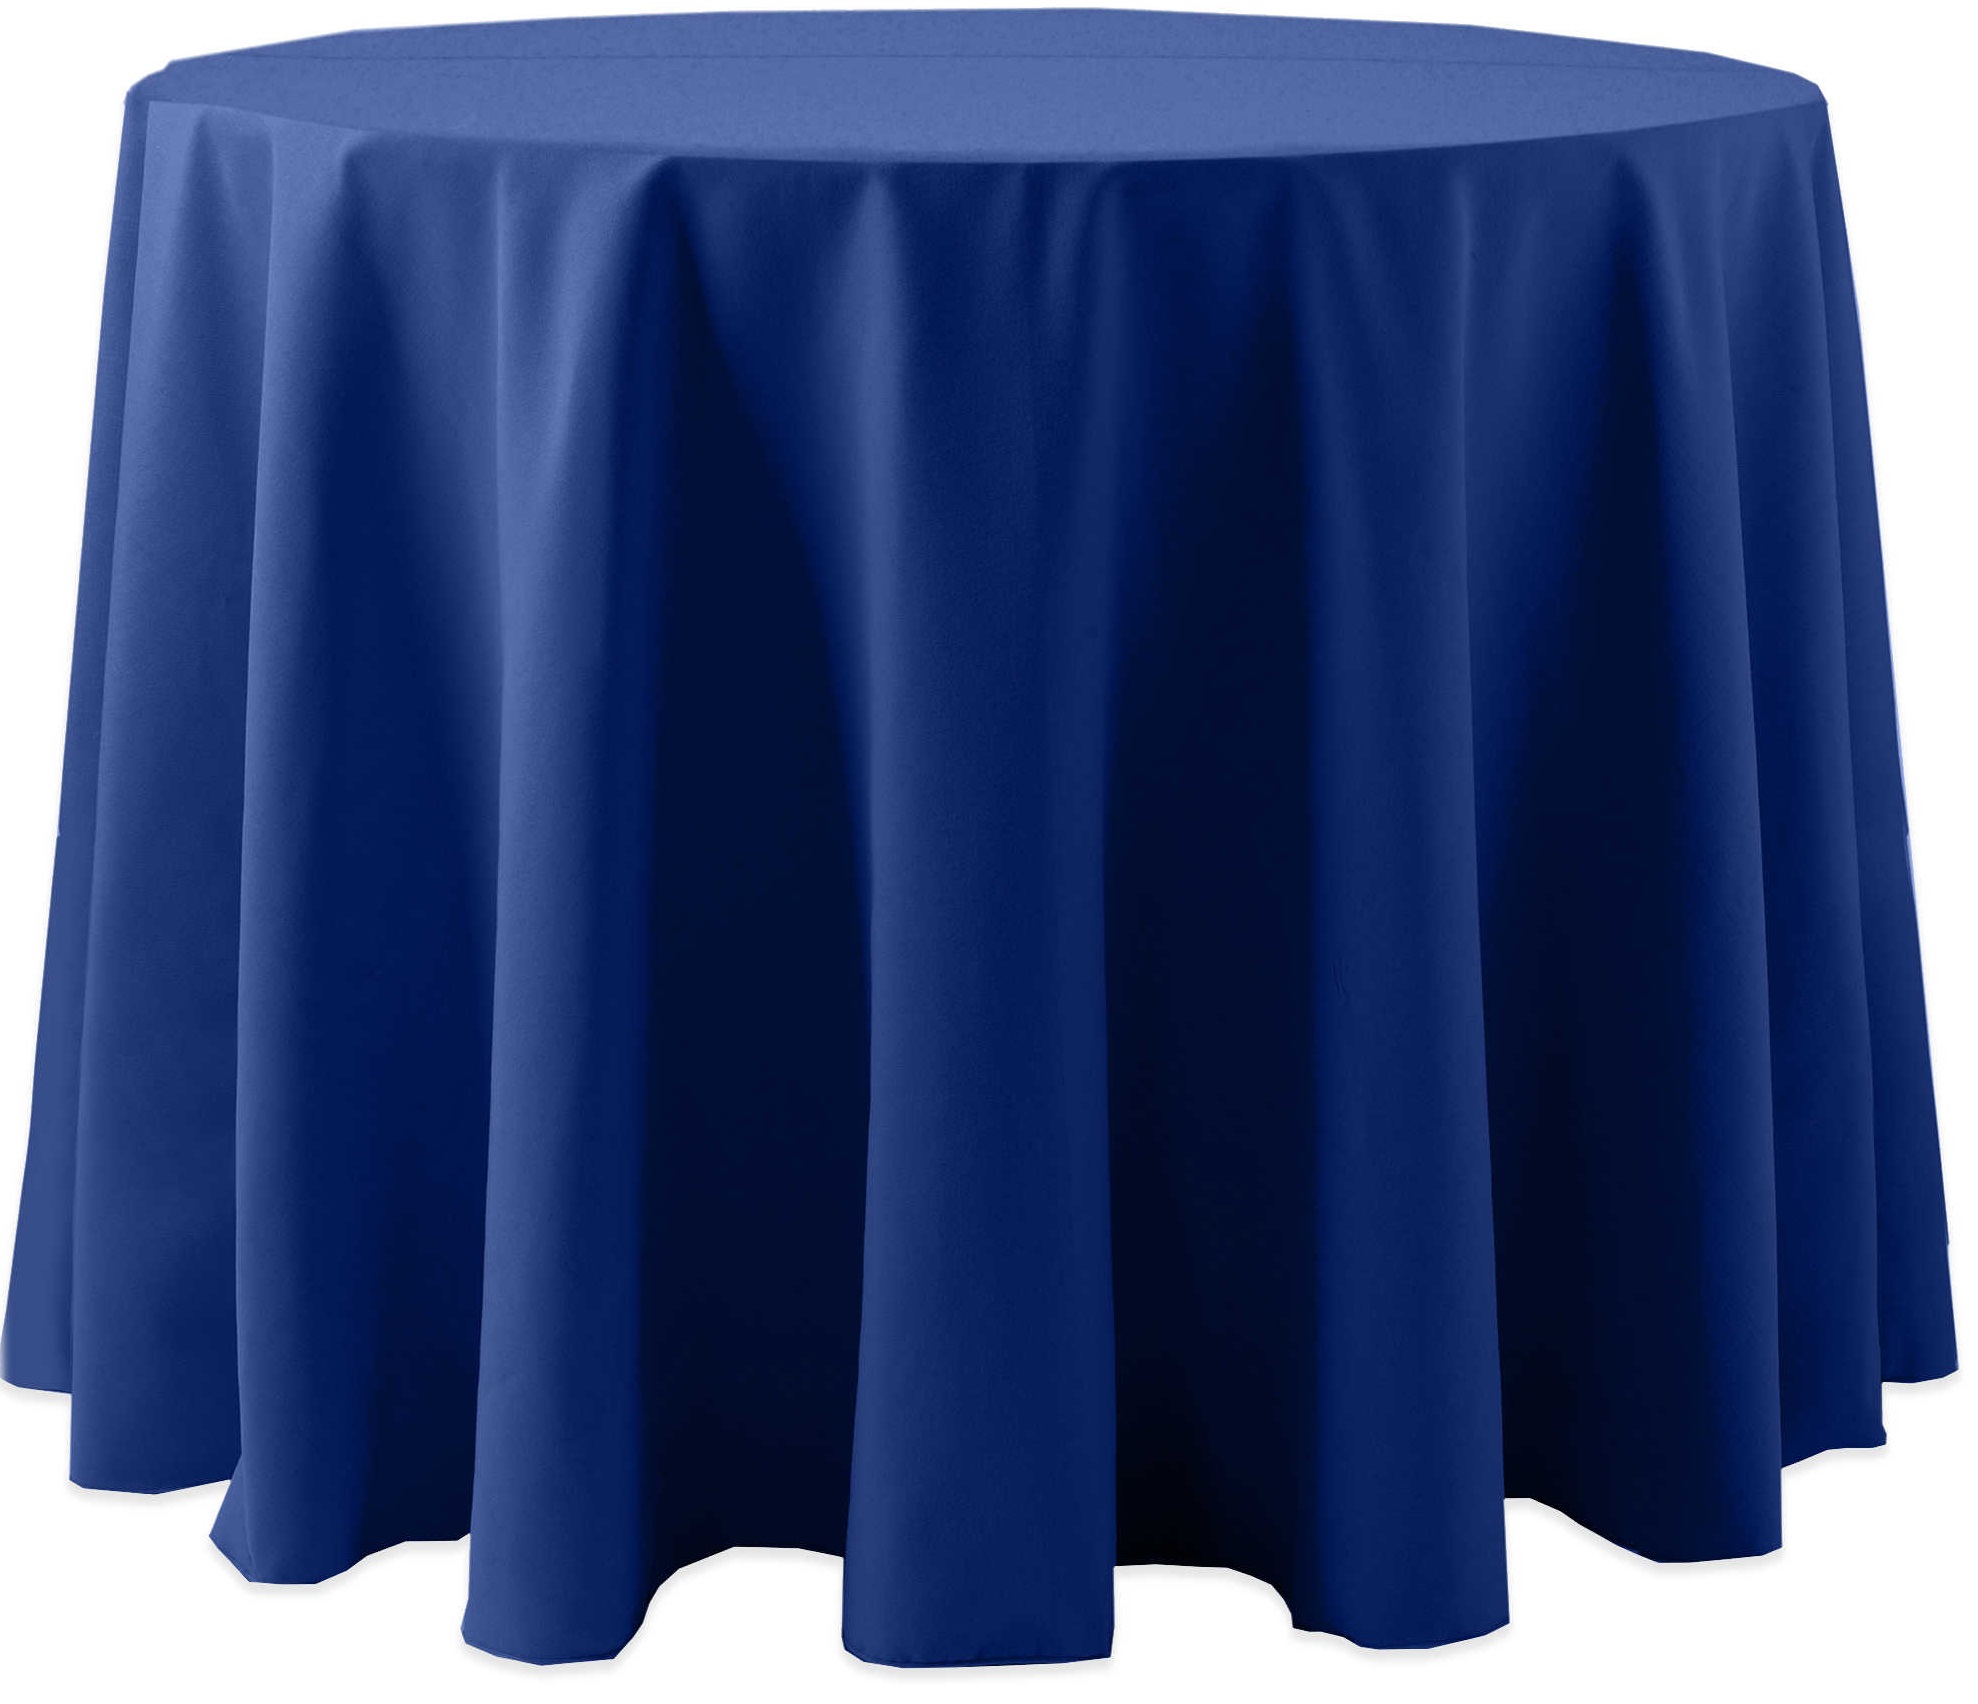 Spun Polyester Round Tablecloth